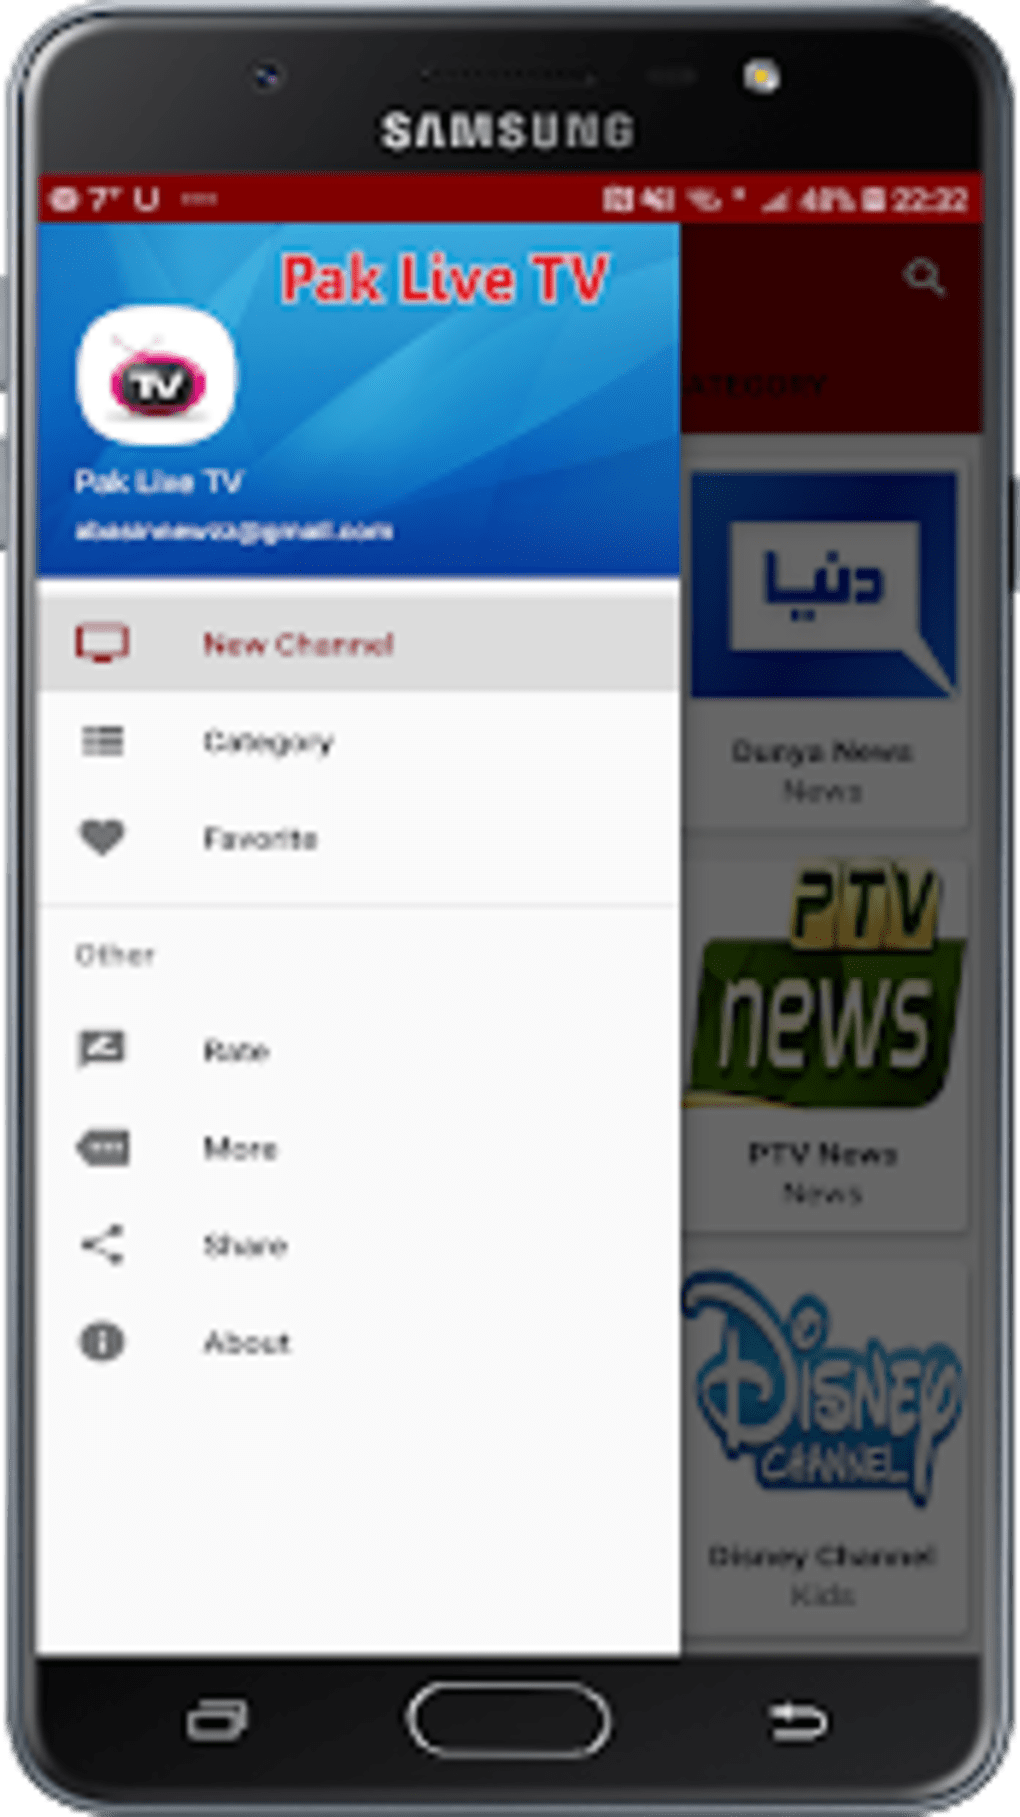 Pak Live Tv Live TV News PTV Sports GEO Super APK for Android